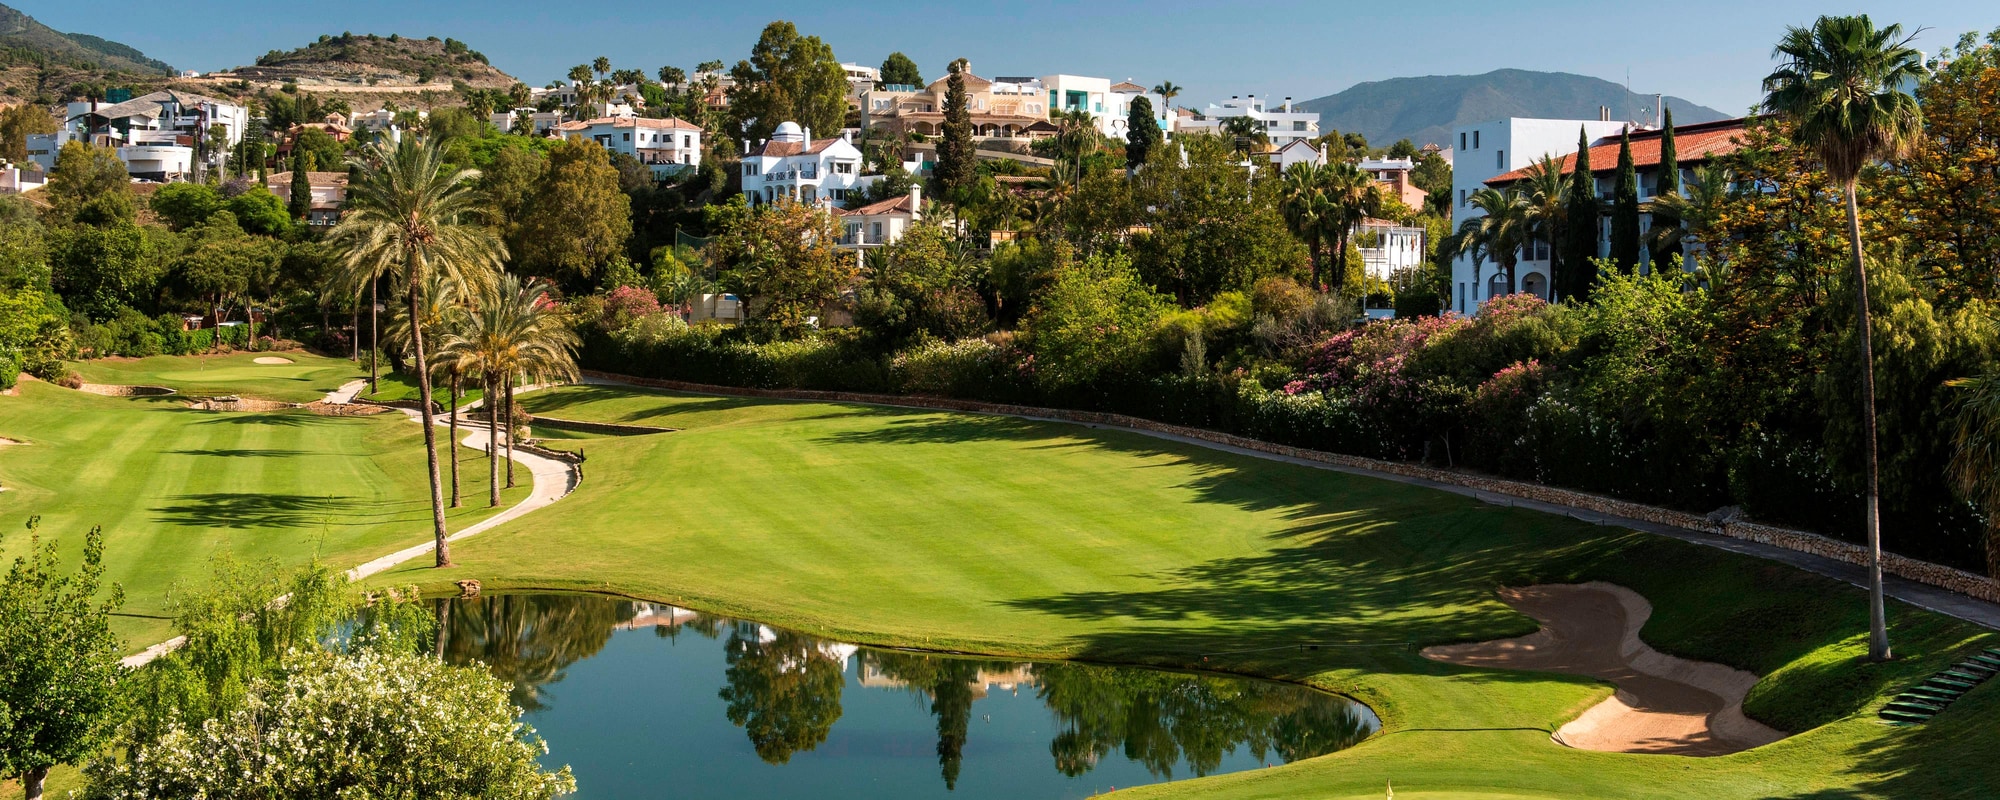 Pioner Omkostningsprocent tonehøjde La Quinta Golf & Country Club - Golf course located near Marbella